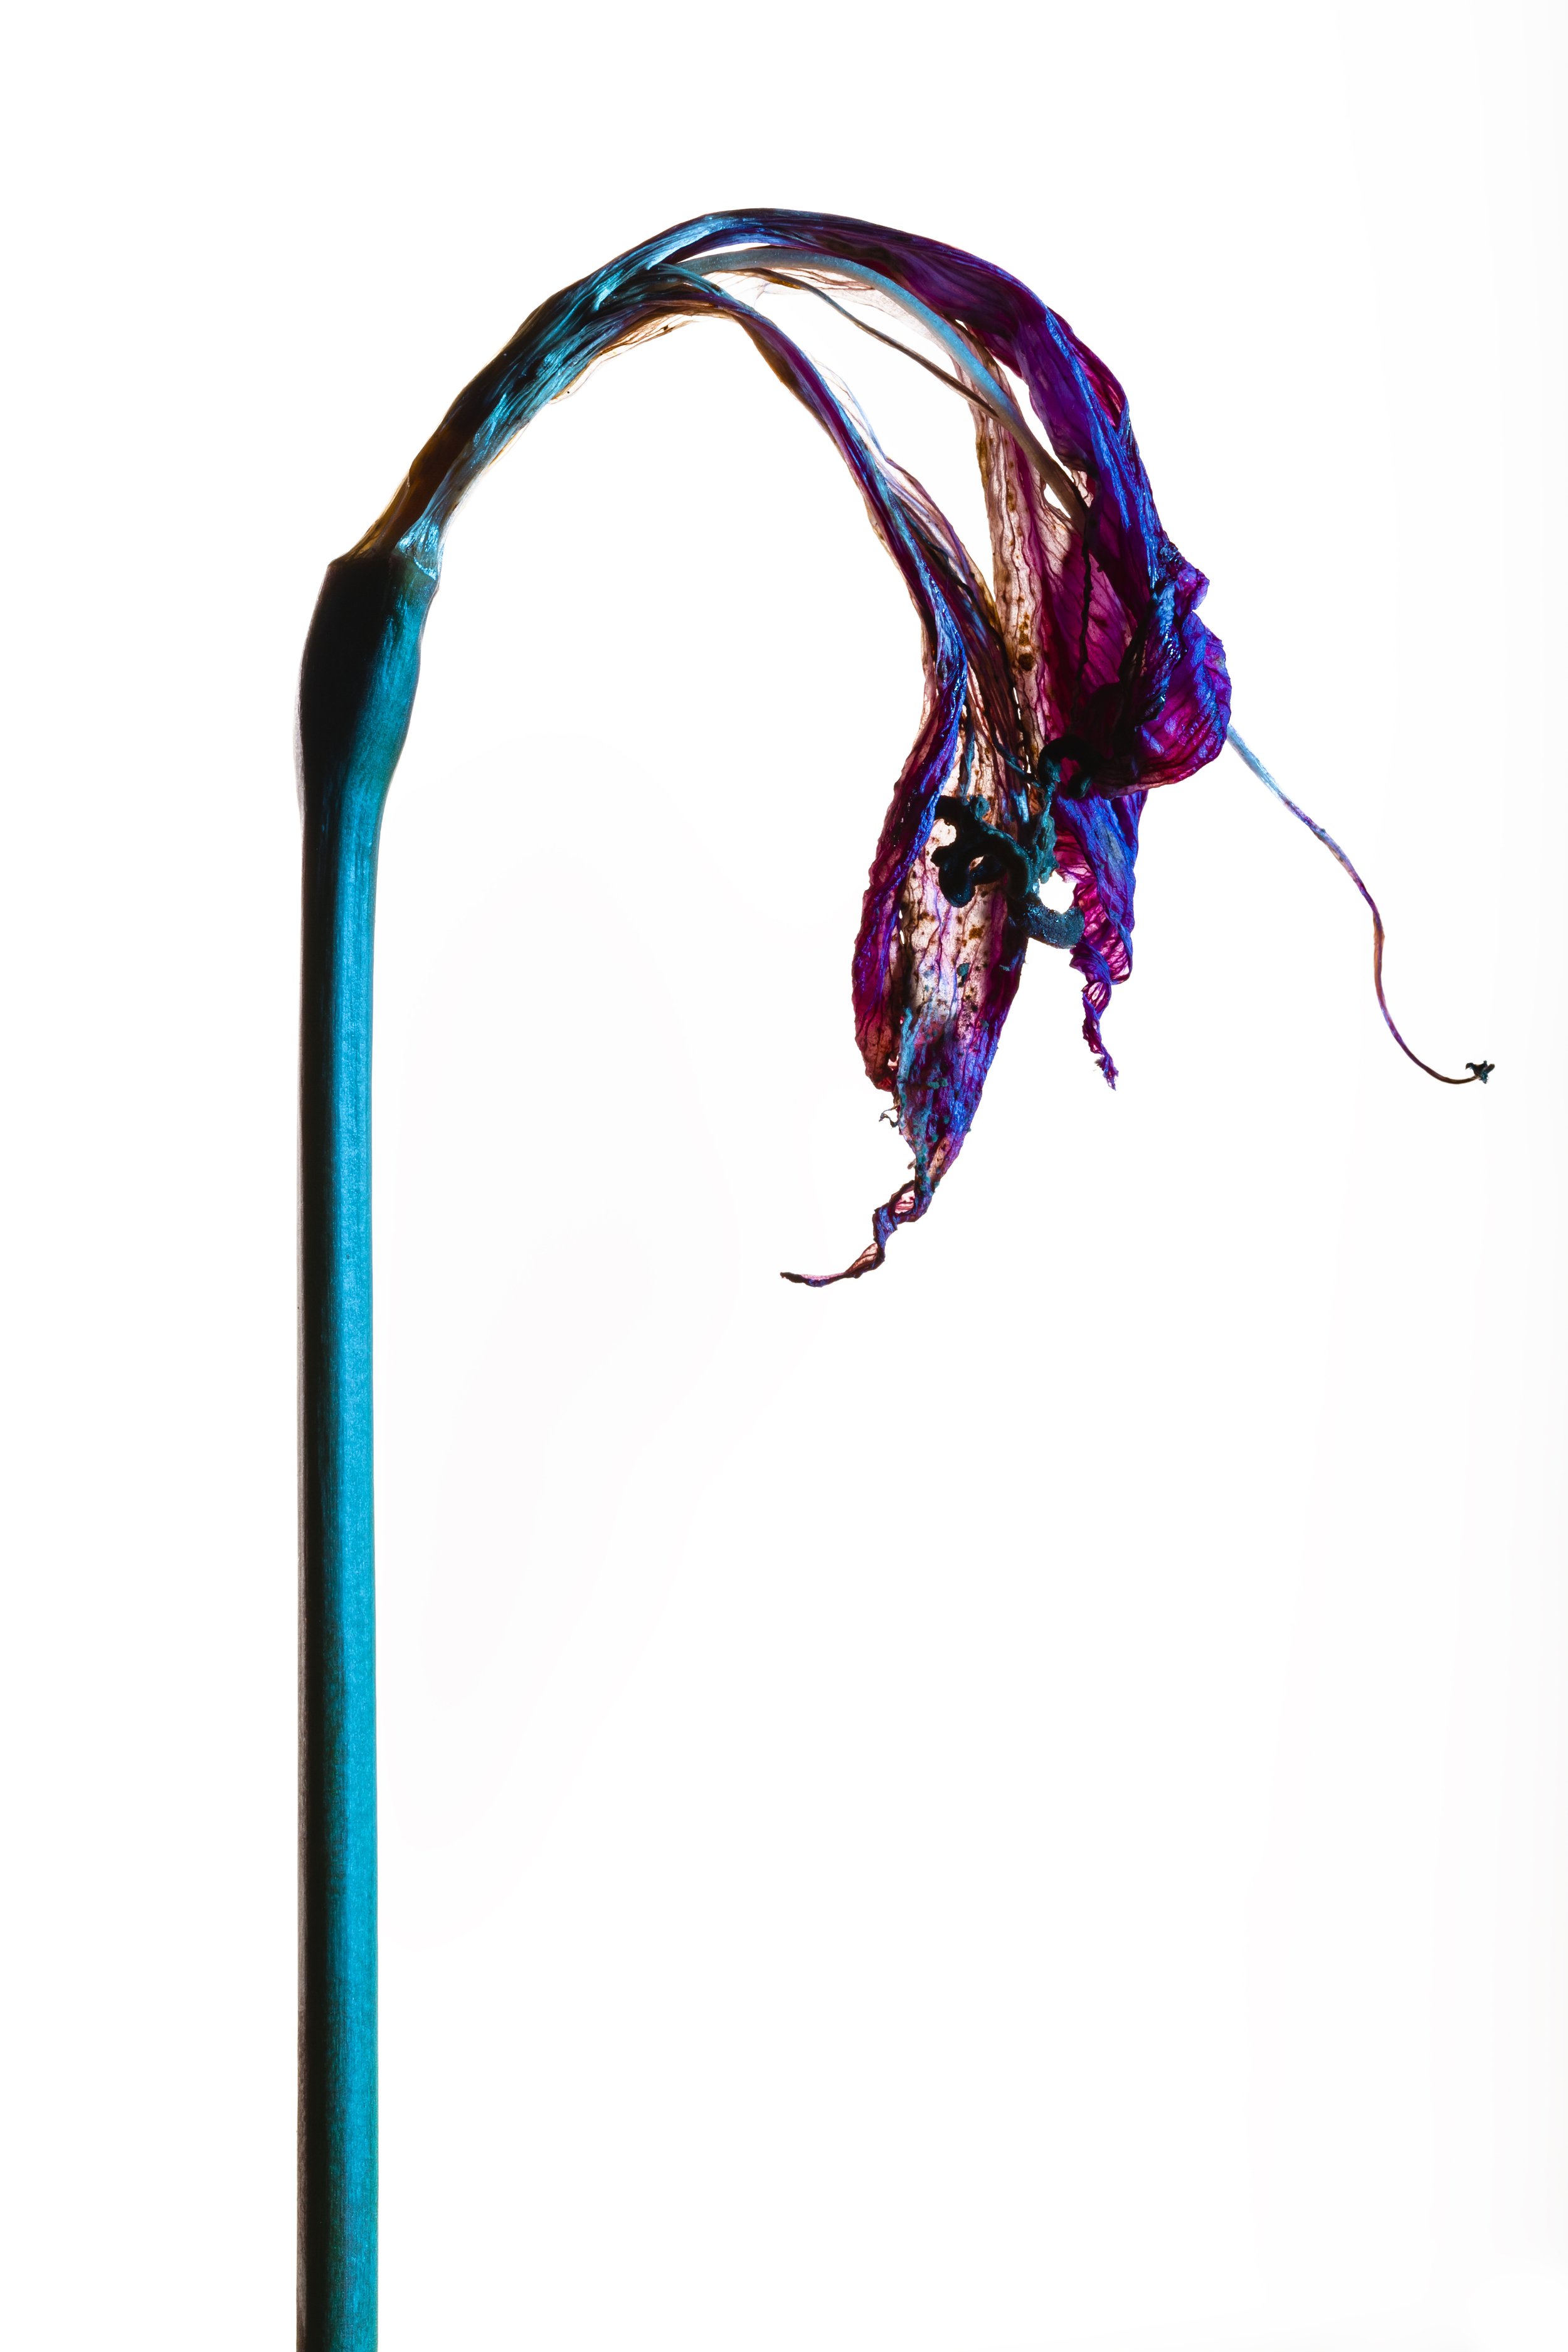 Belladonna stem and flower - Still life